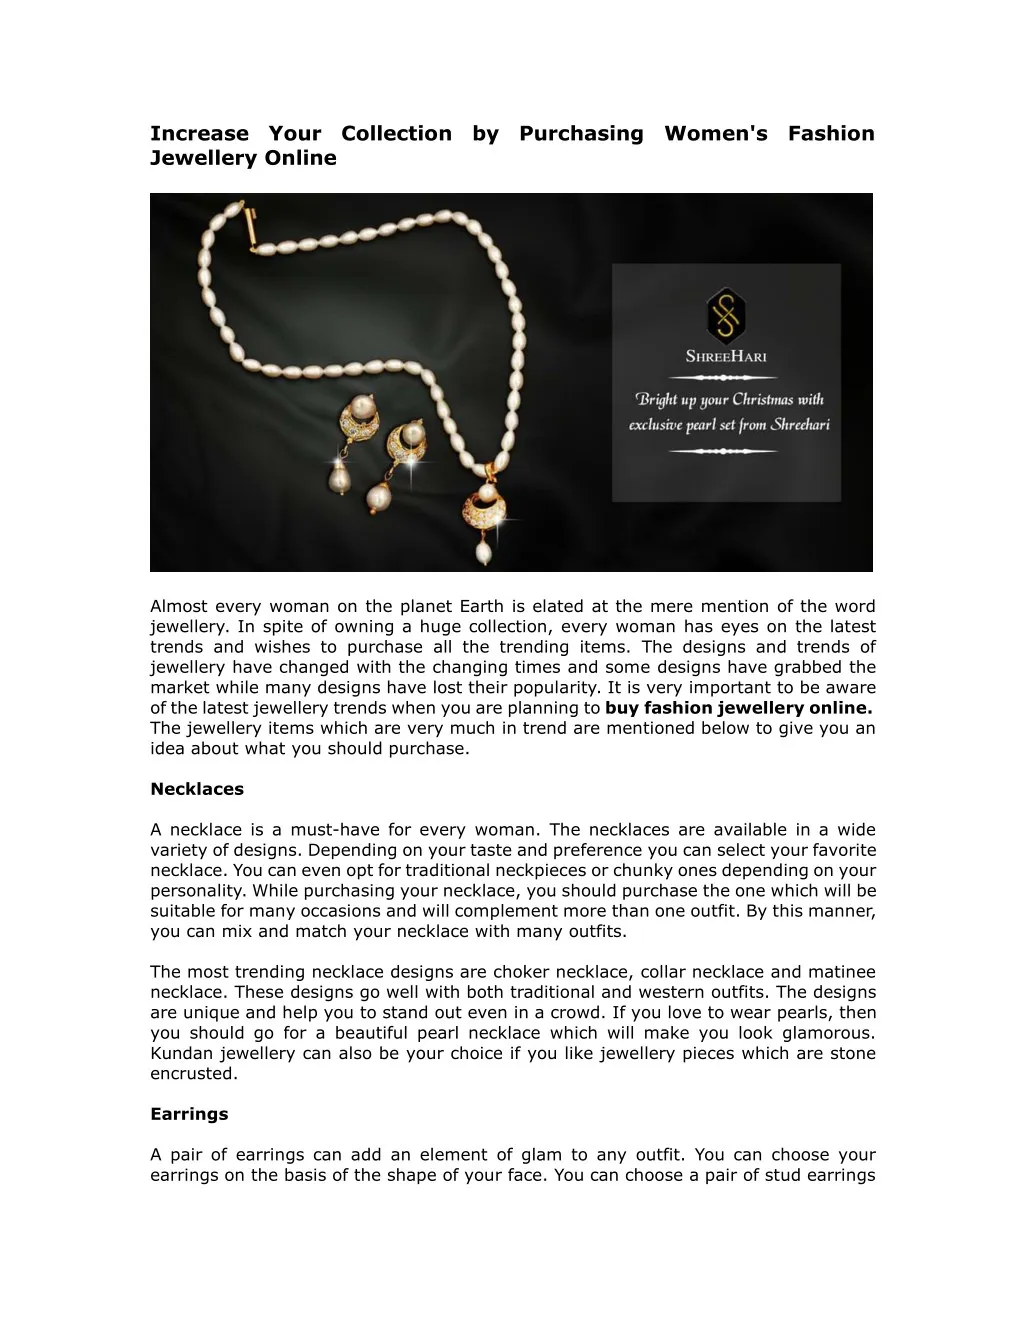 increase jewellery online